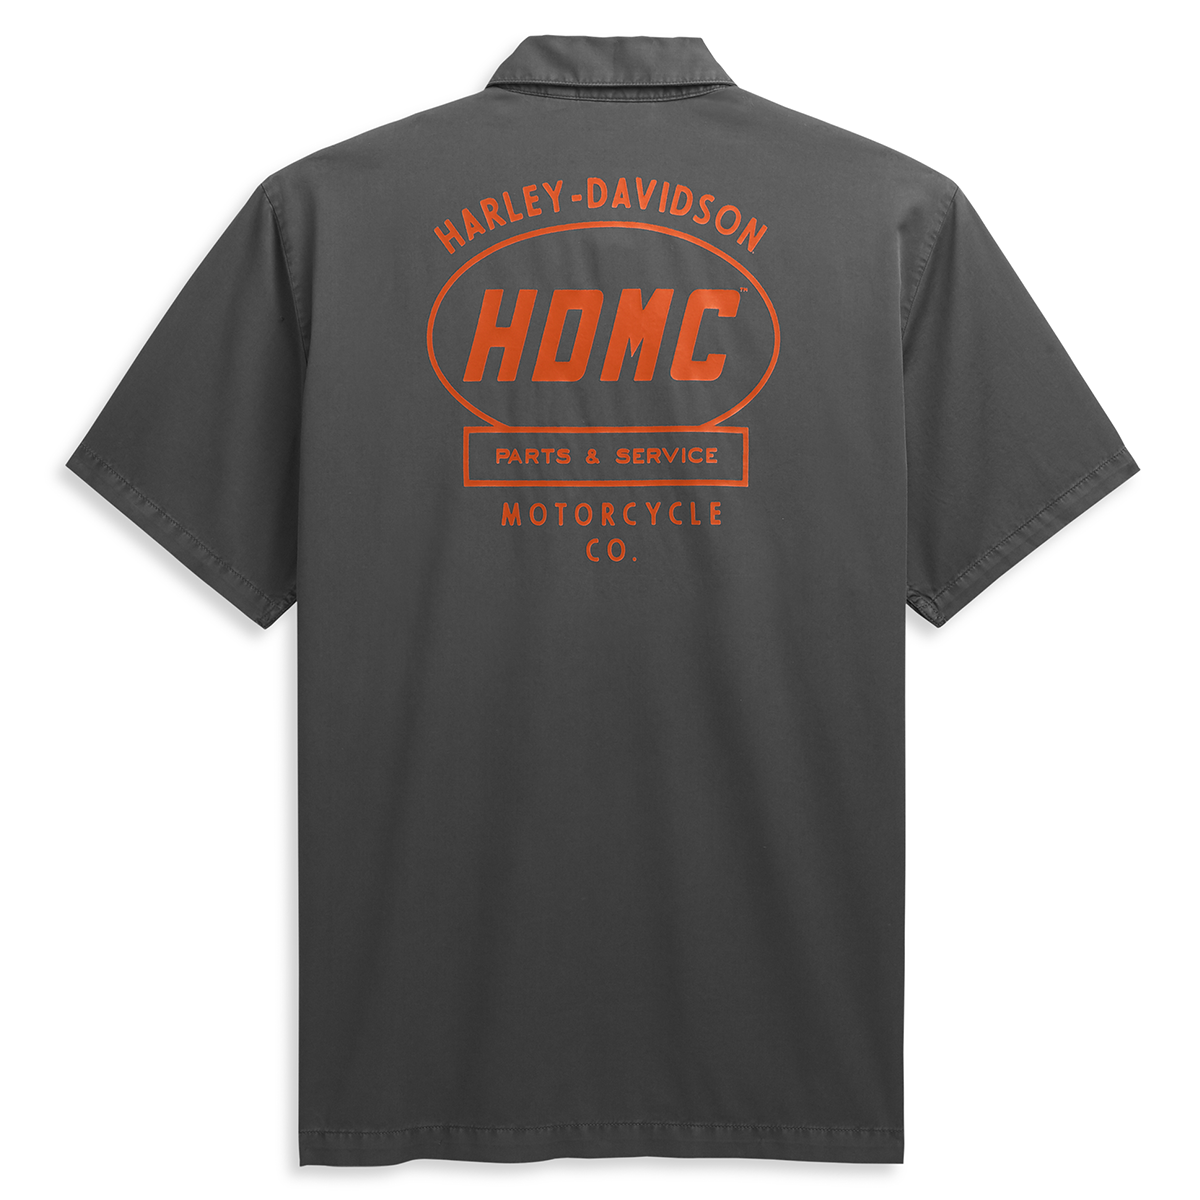 Harley-Davidson HDMC Men's Mechanics Shirt